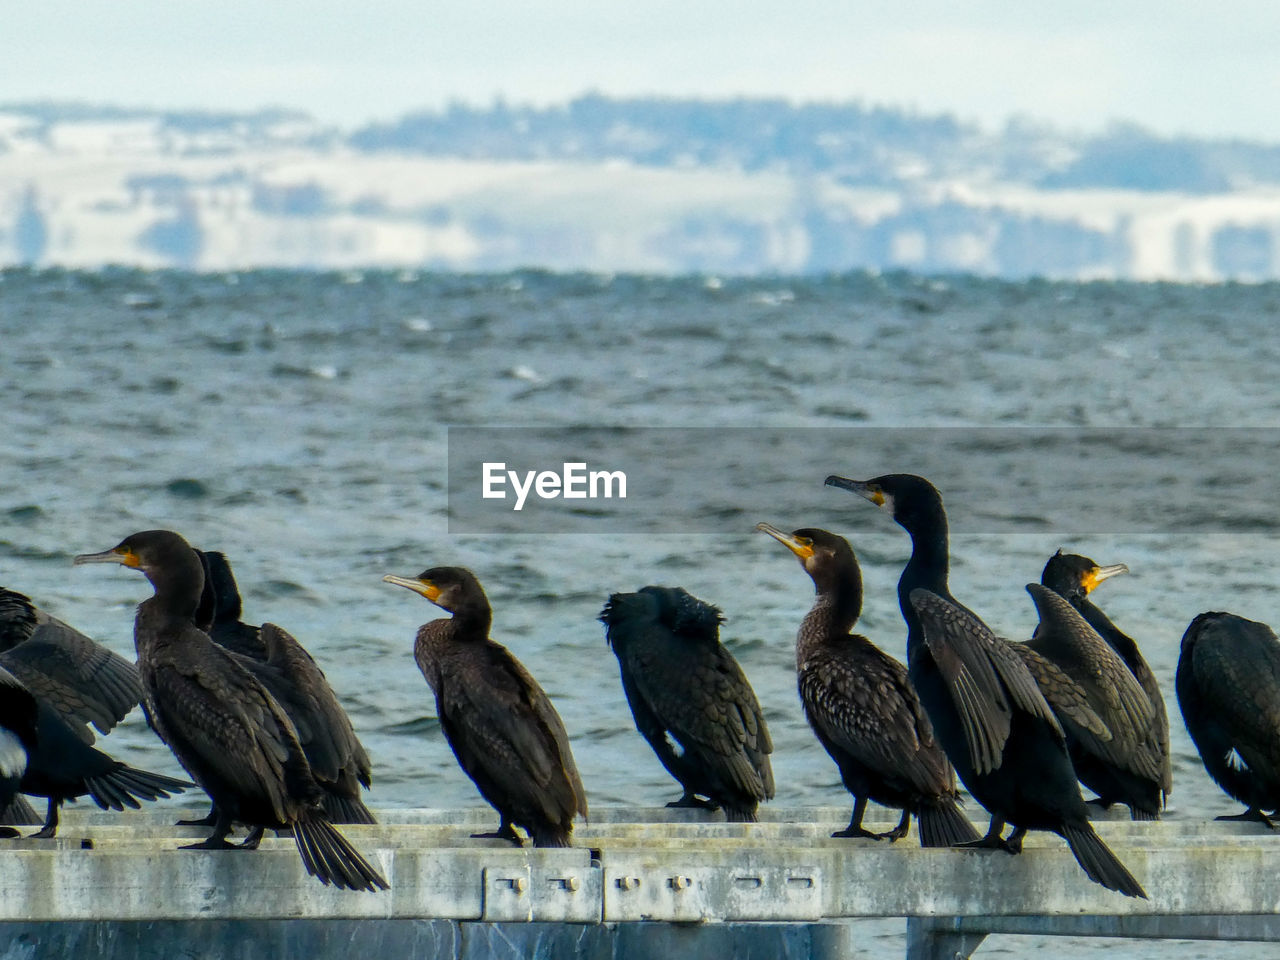 Cormorants against sea 